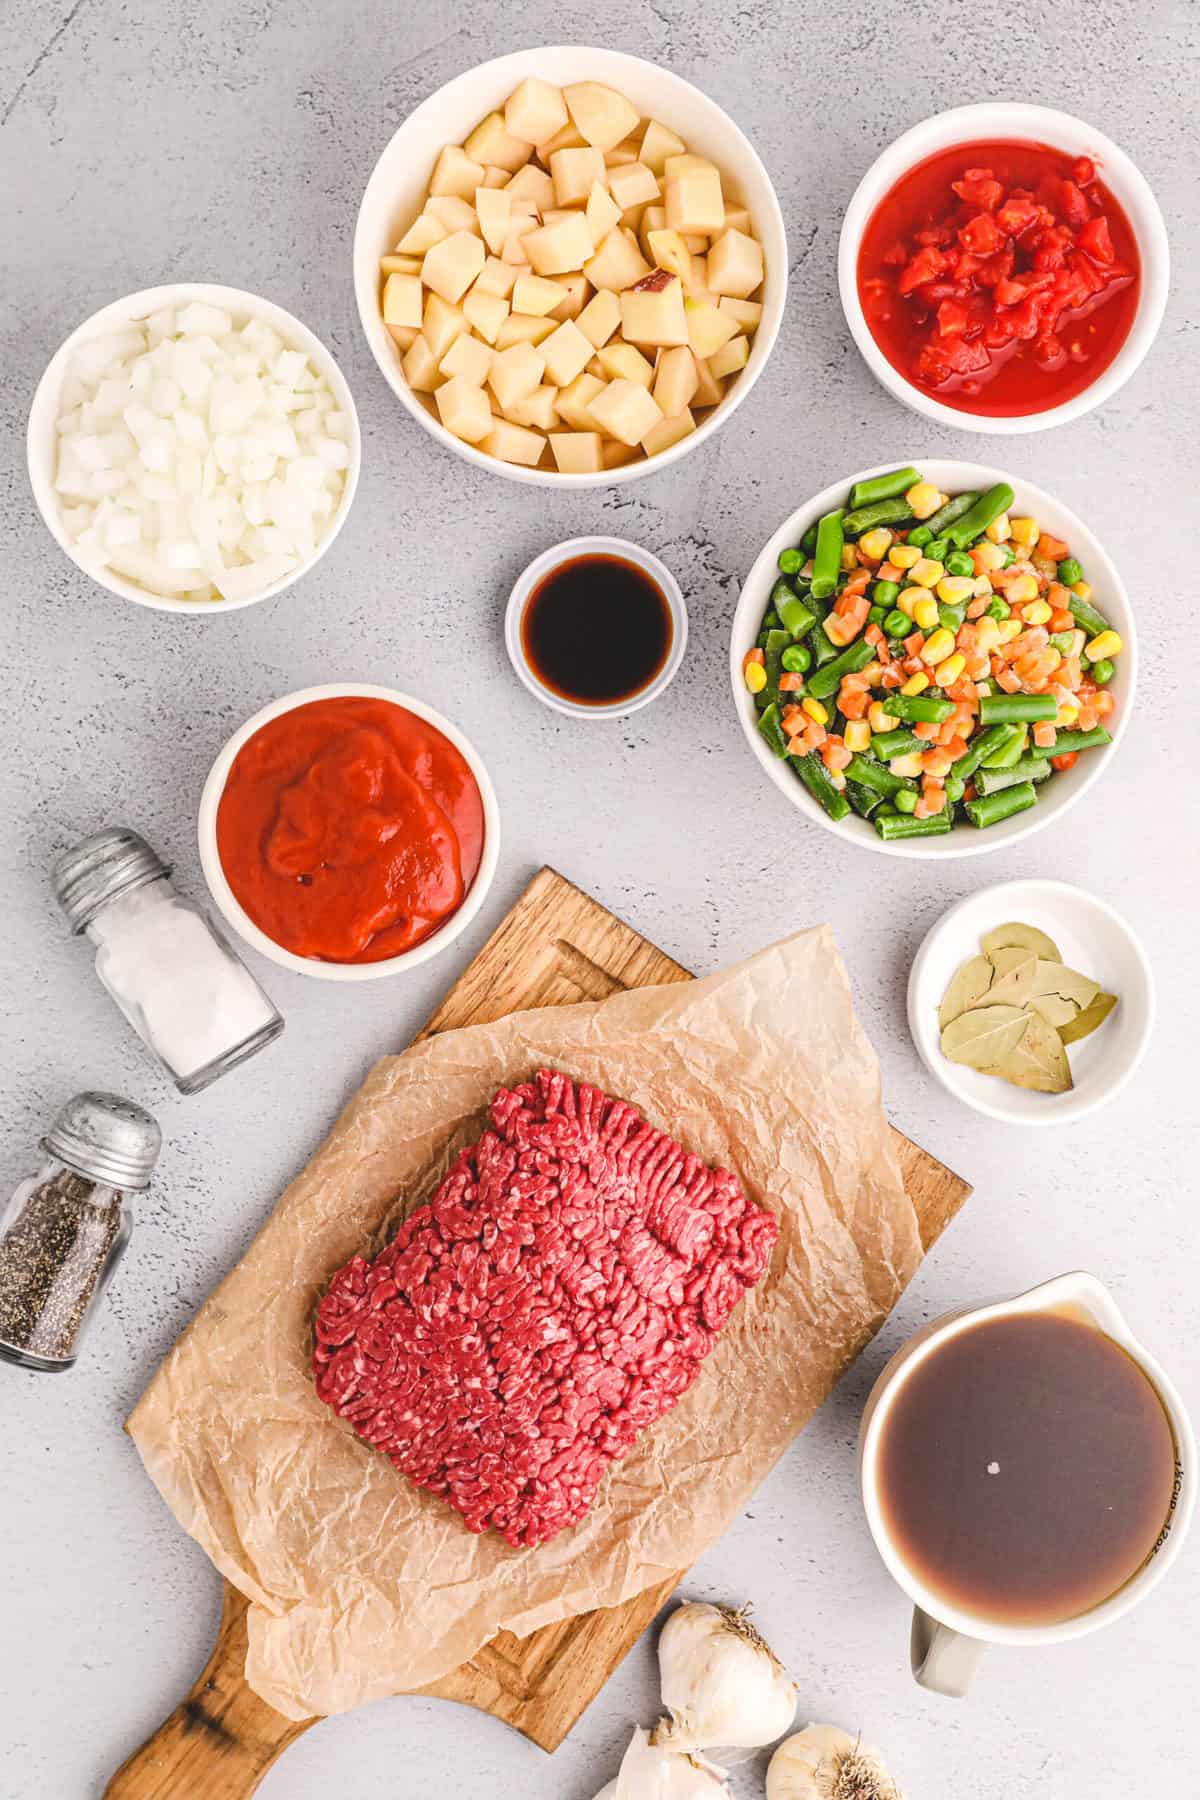 ingredients to make hamburger soup
chopped veggies and beef